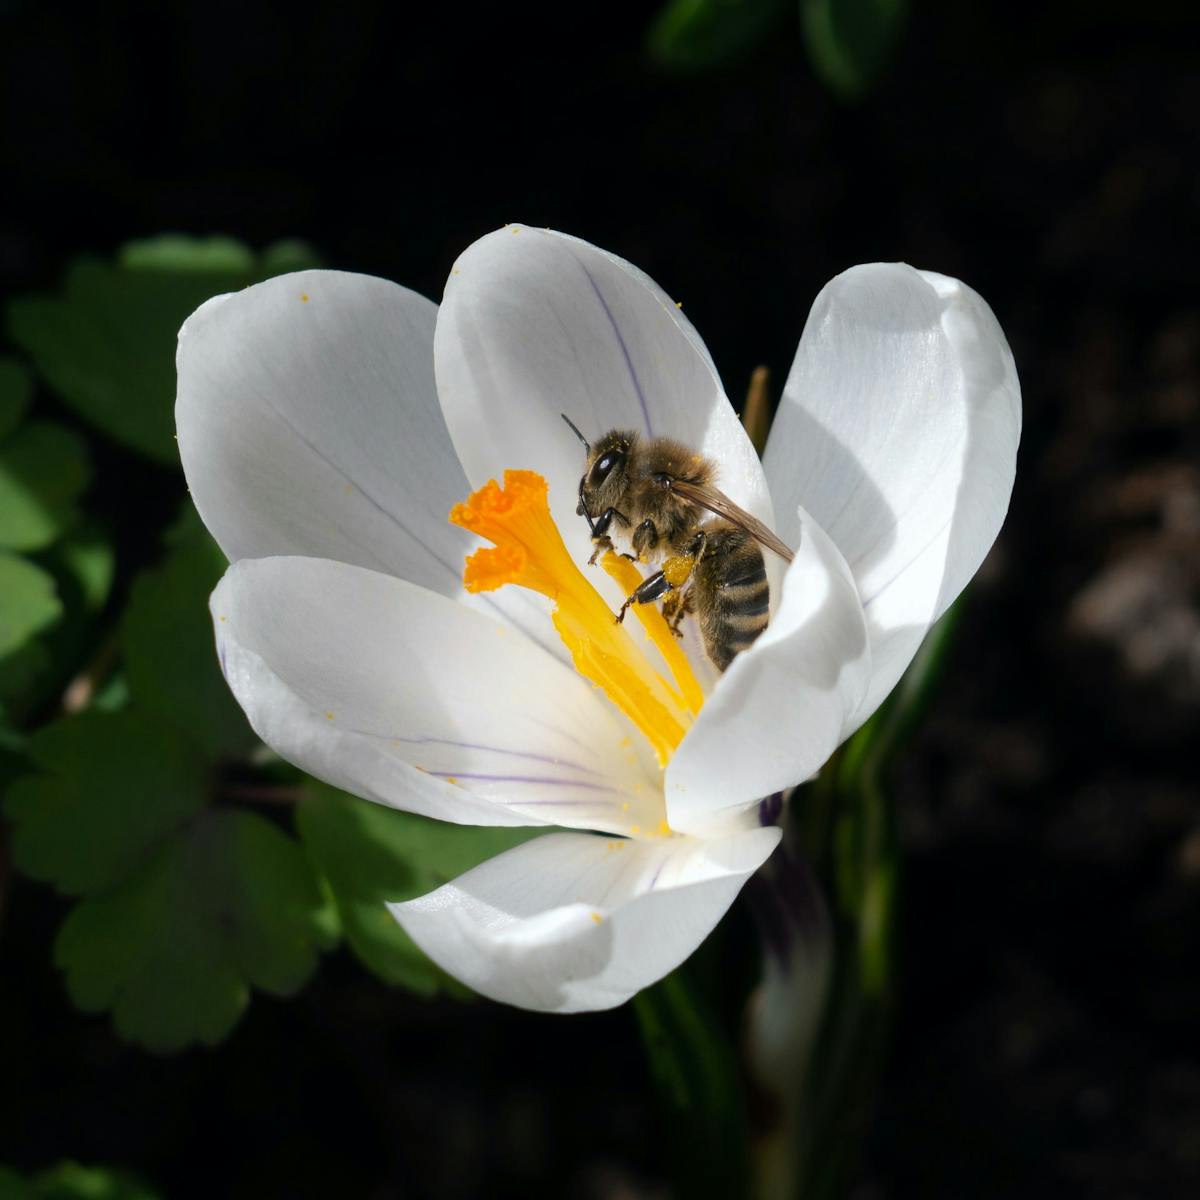 Urban gardens provide an abundant food supply for crucial pollinators